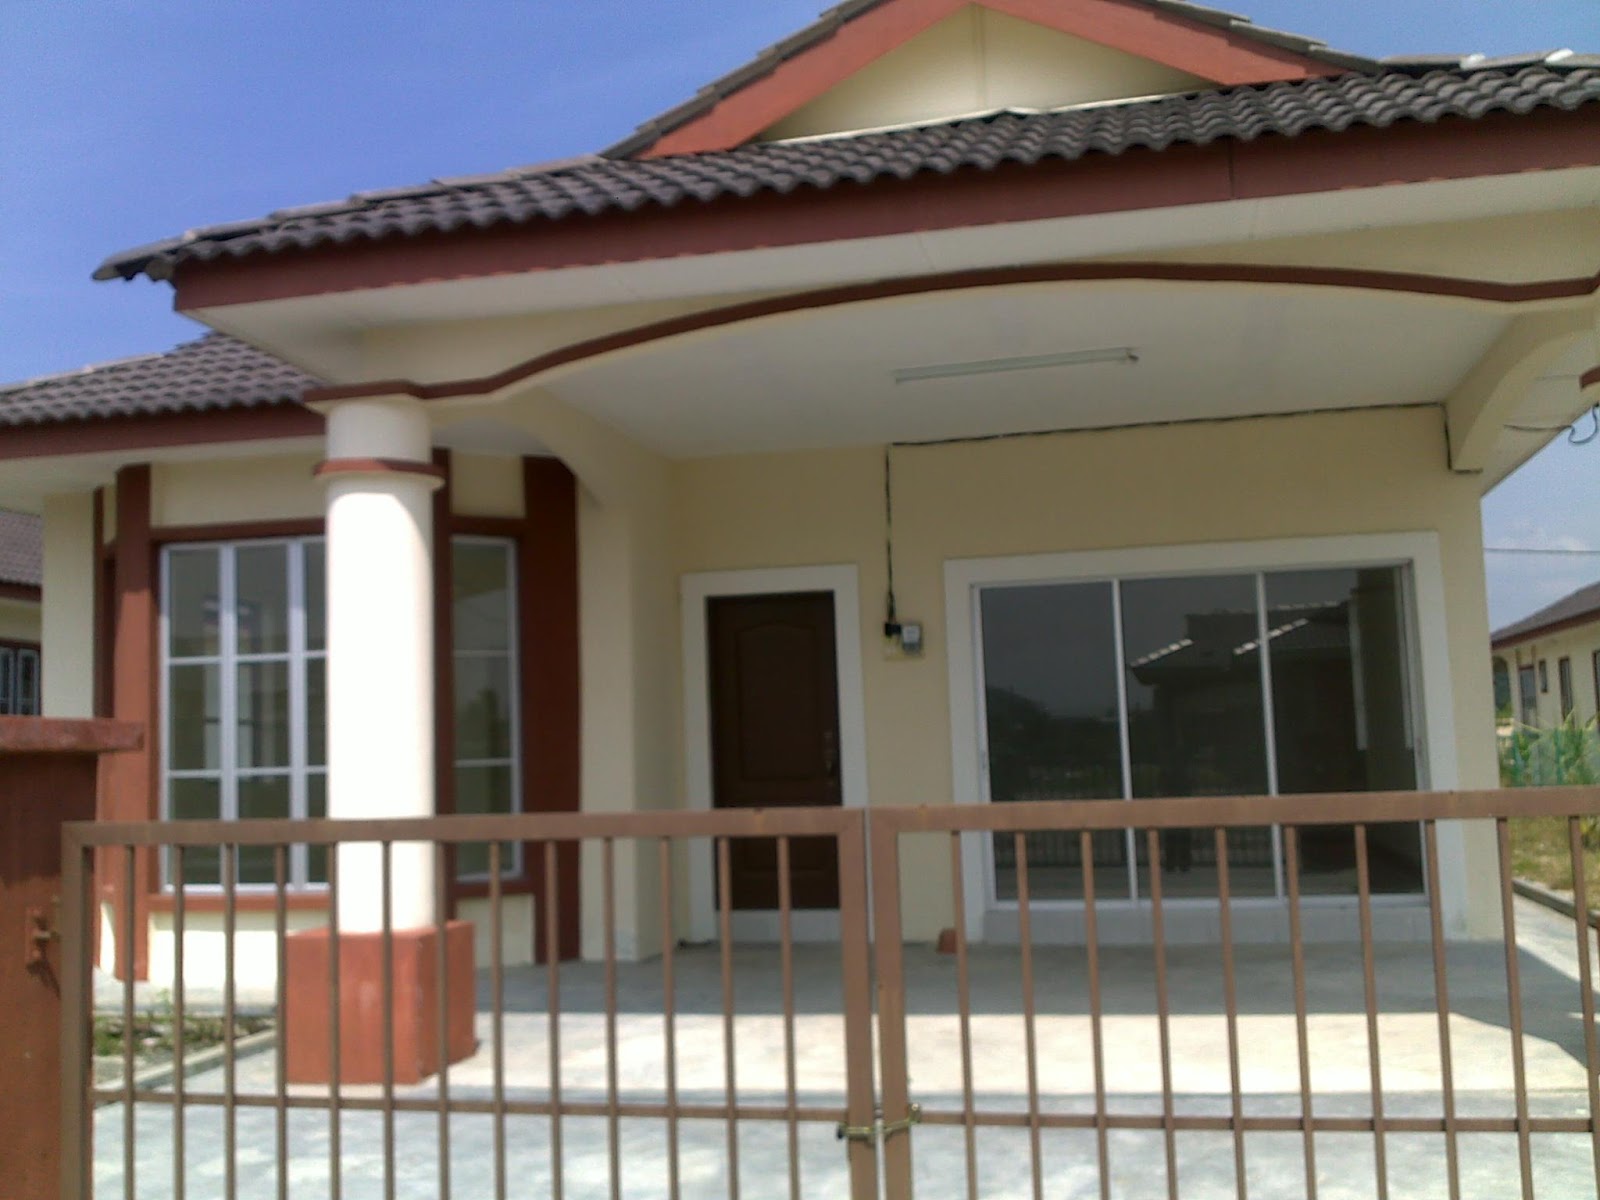  Rumah  Idaman Di Malaysia 10 Rumah  Zee